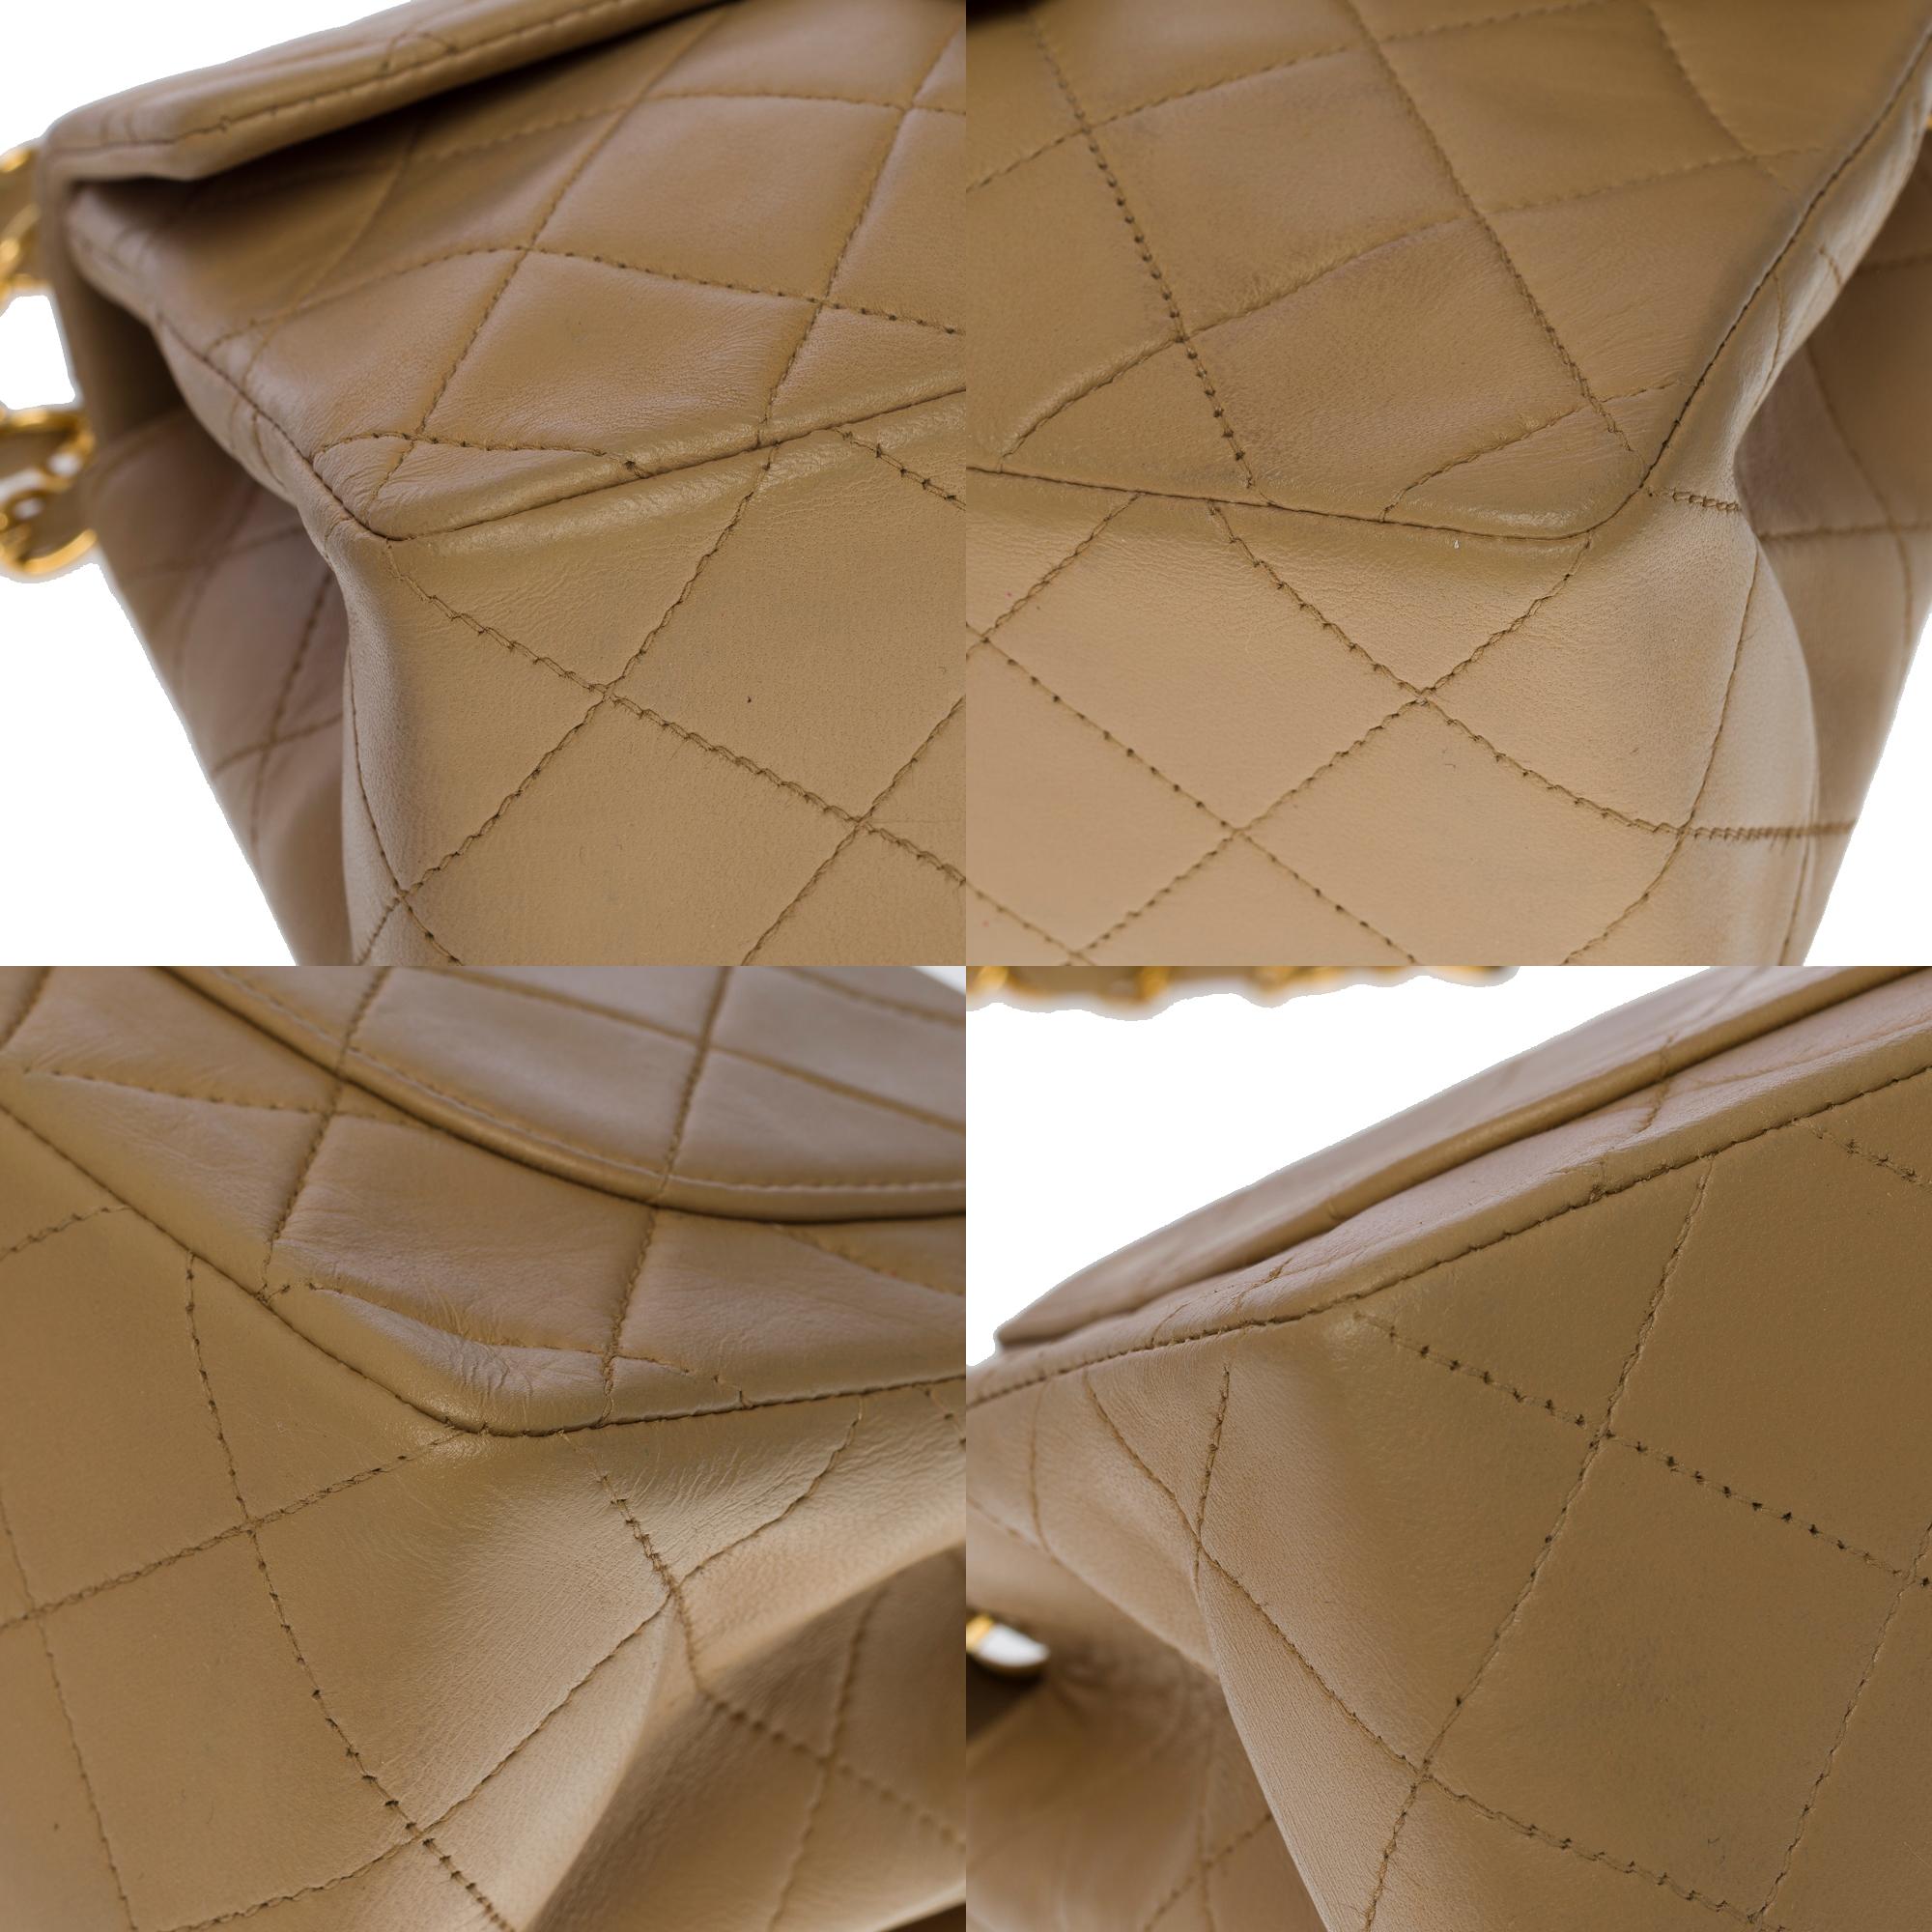 Splendid Chanel Timeless Mini Flap bag in beige quilted lambskin, GHW 8